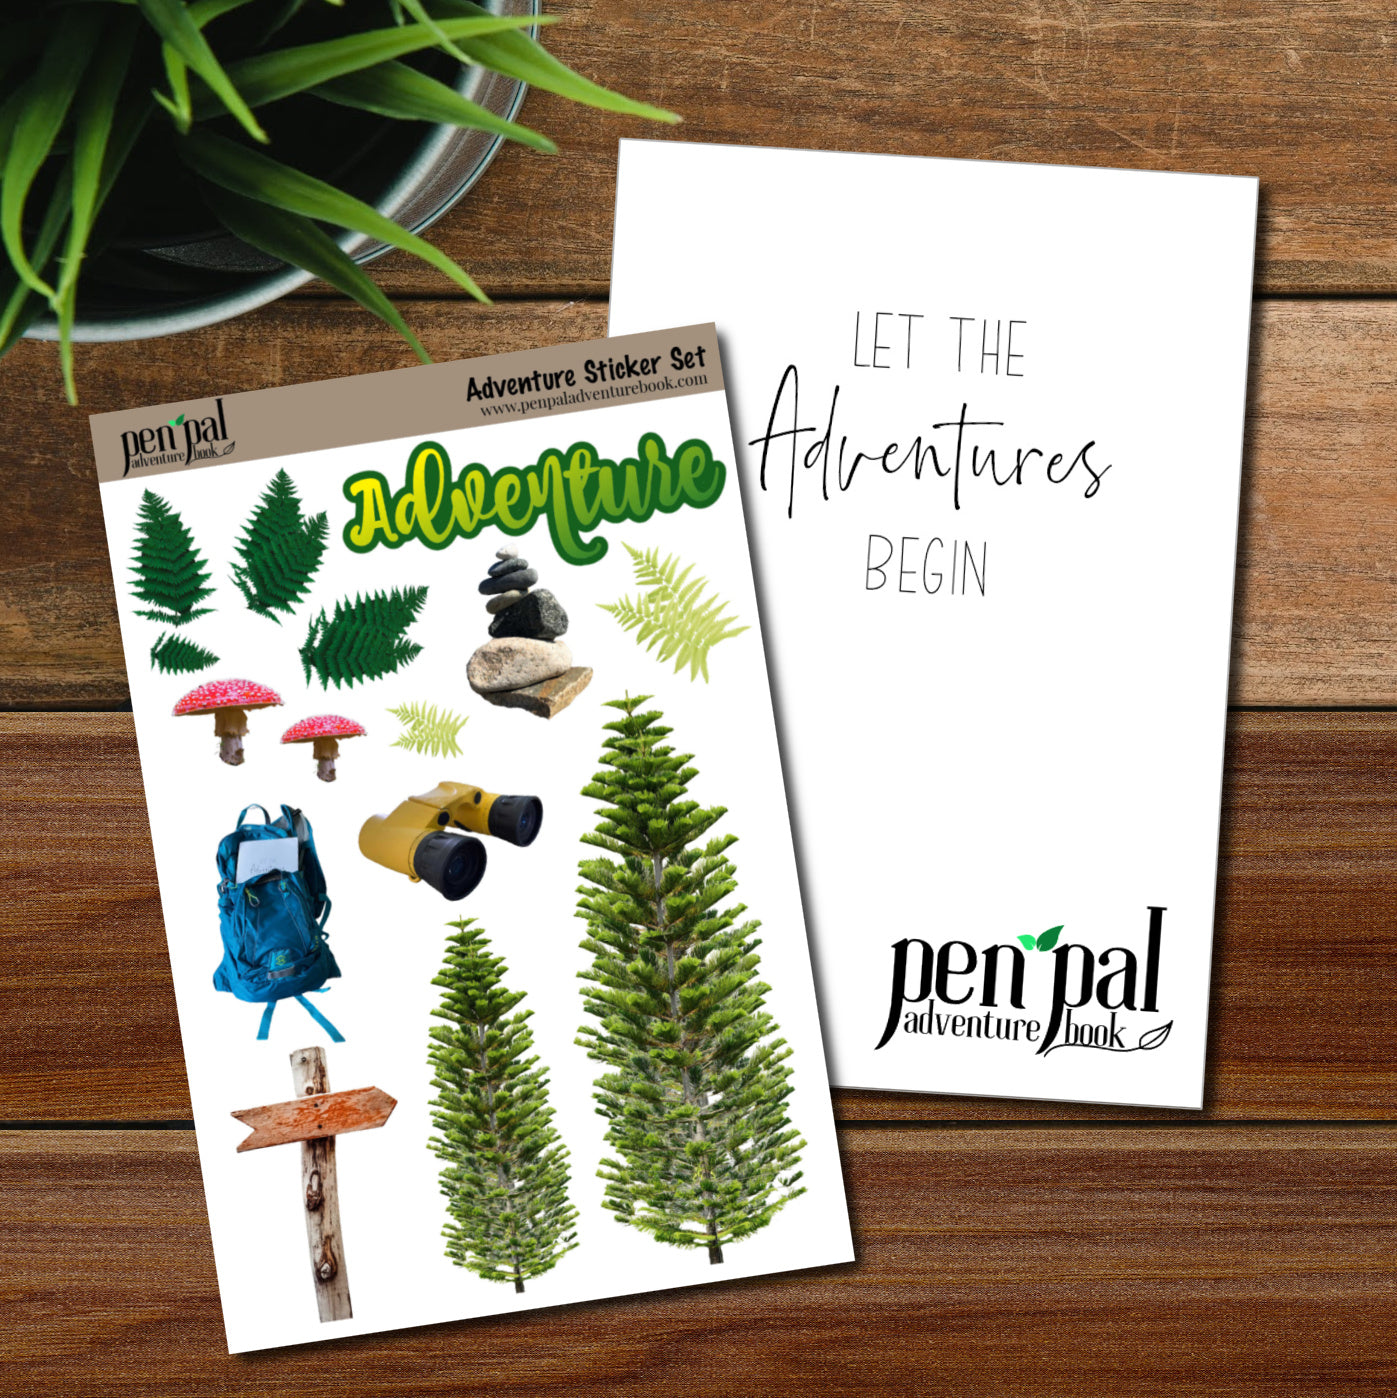 Enjoy the View Gift Set with Pen Pal Adventure Journal & Adventure Hiking Sticker Set